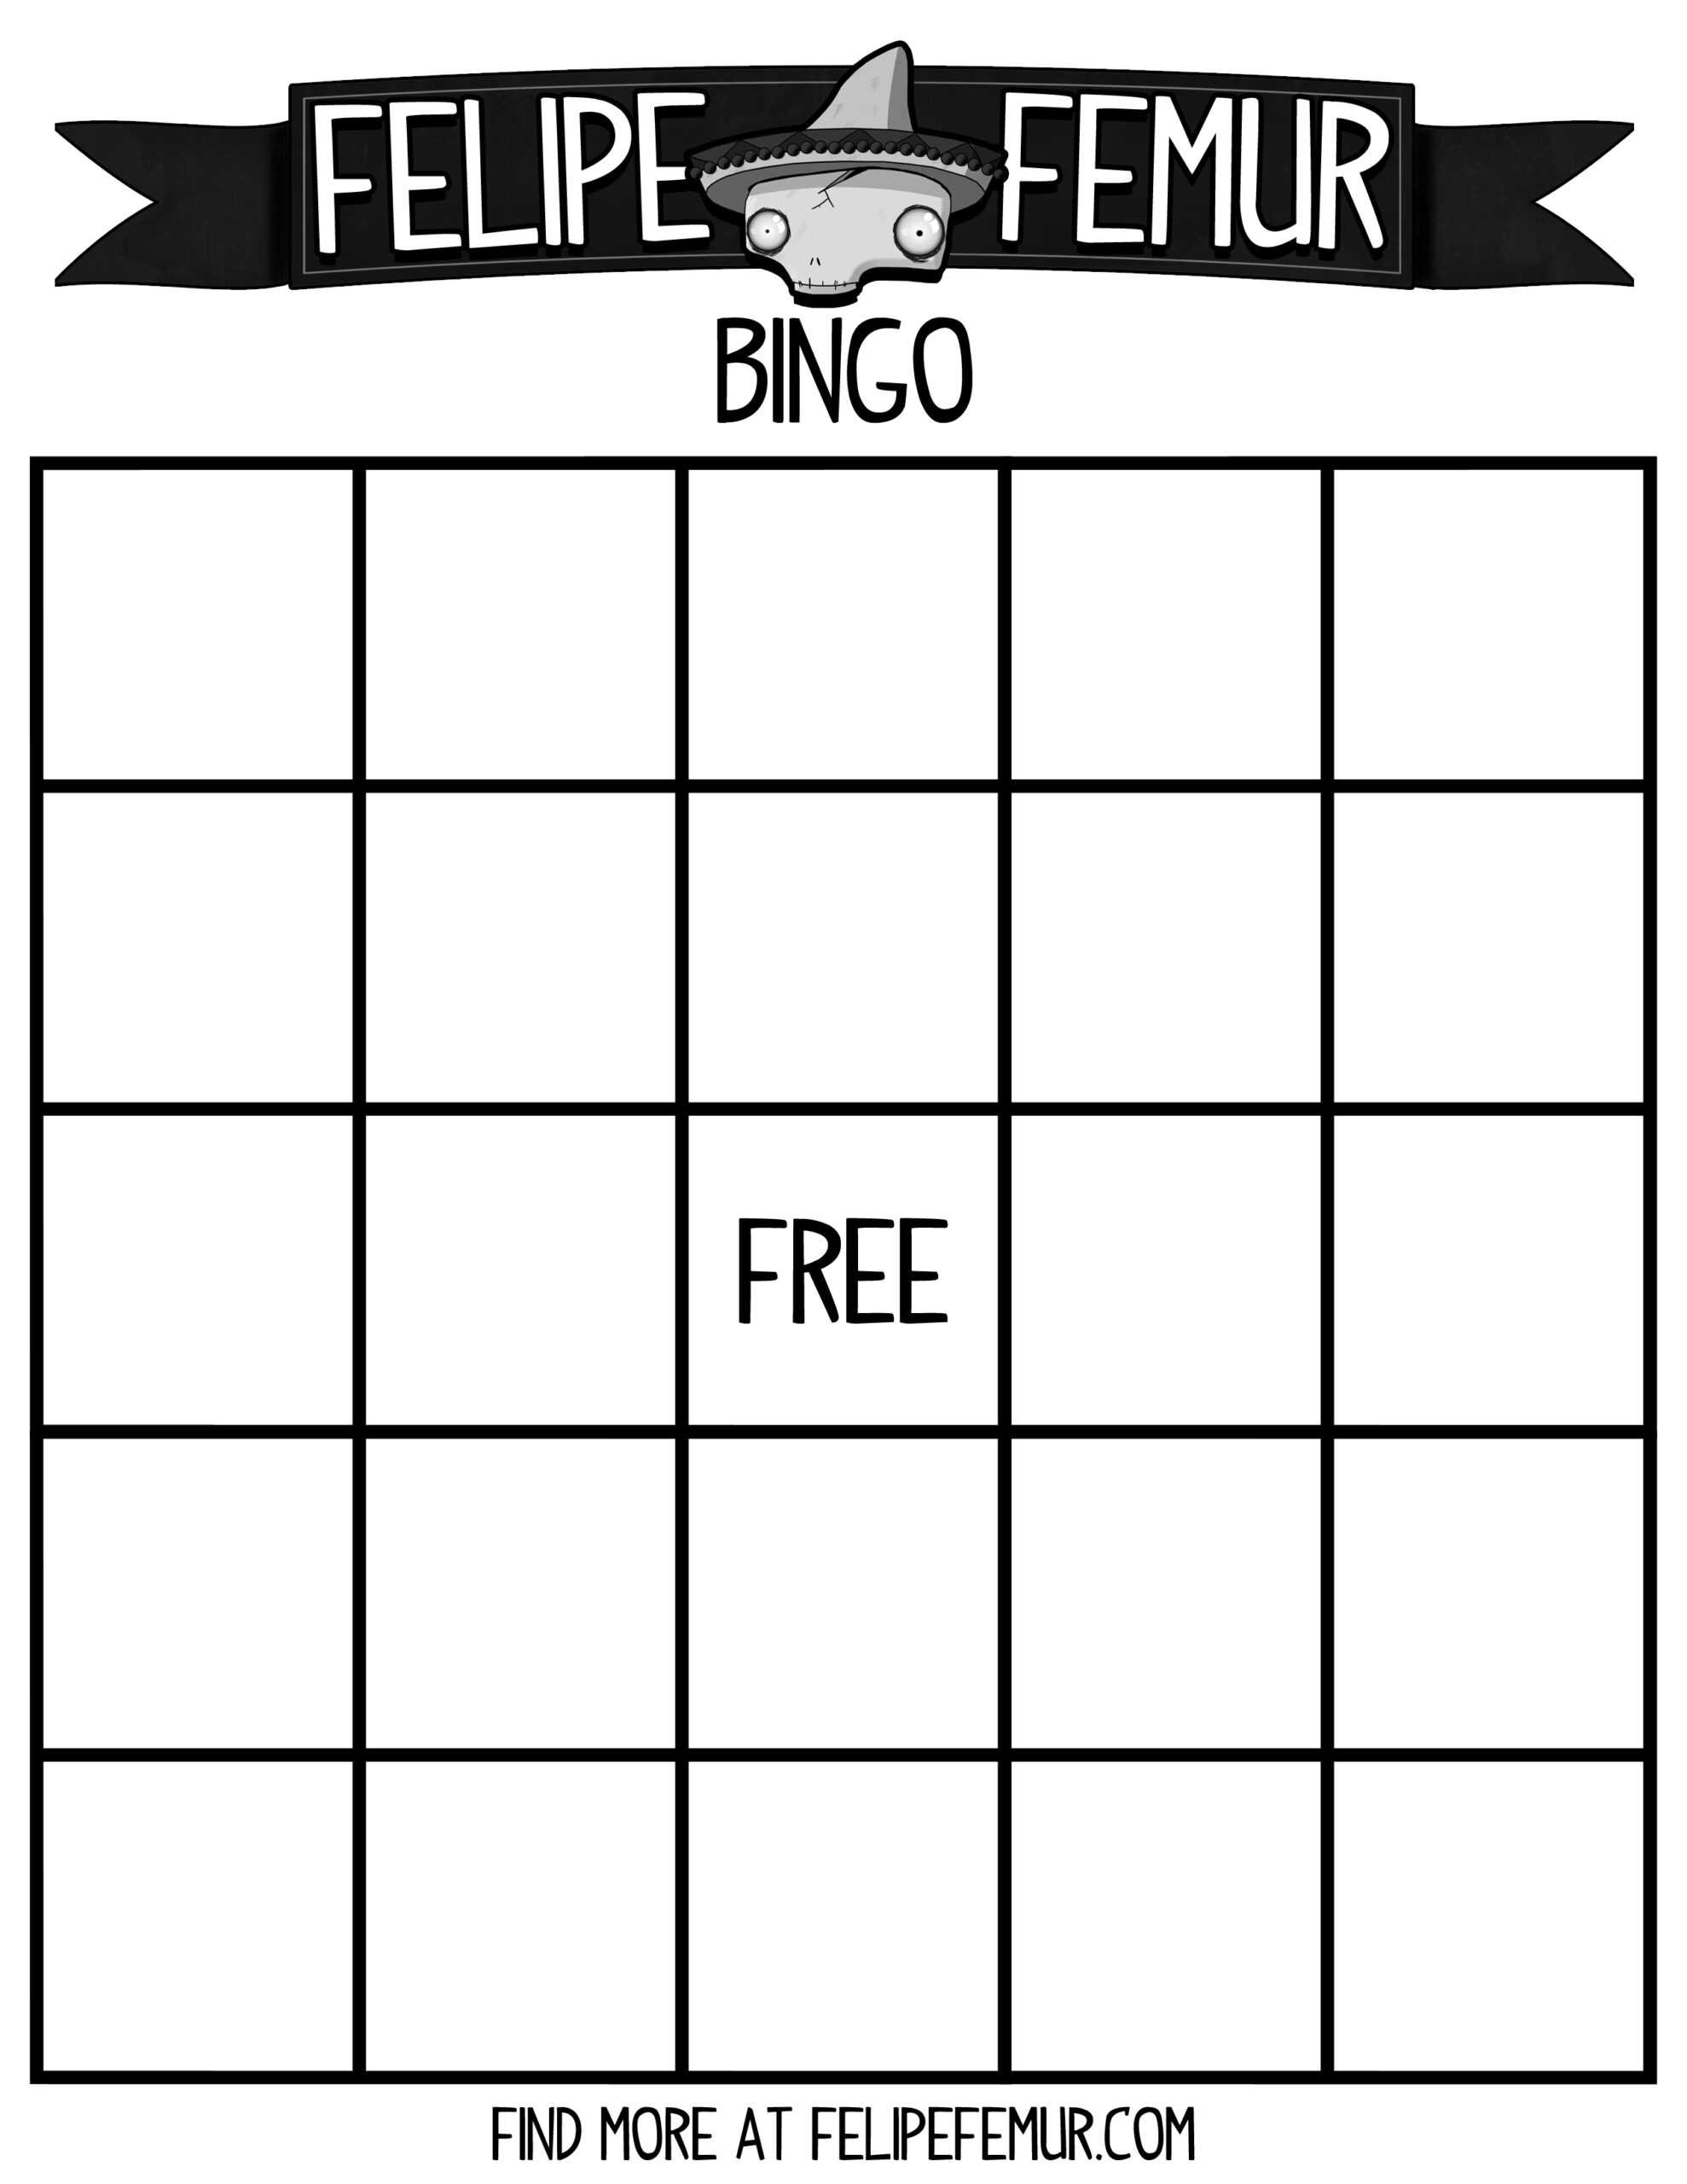 014 Template Ideas Free Bingo Card Grace And Good Eats Regarding Bingo Card Template Word